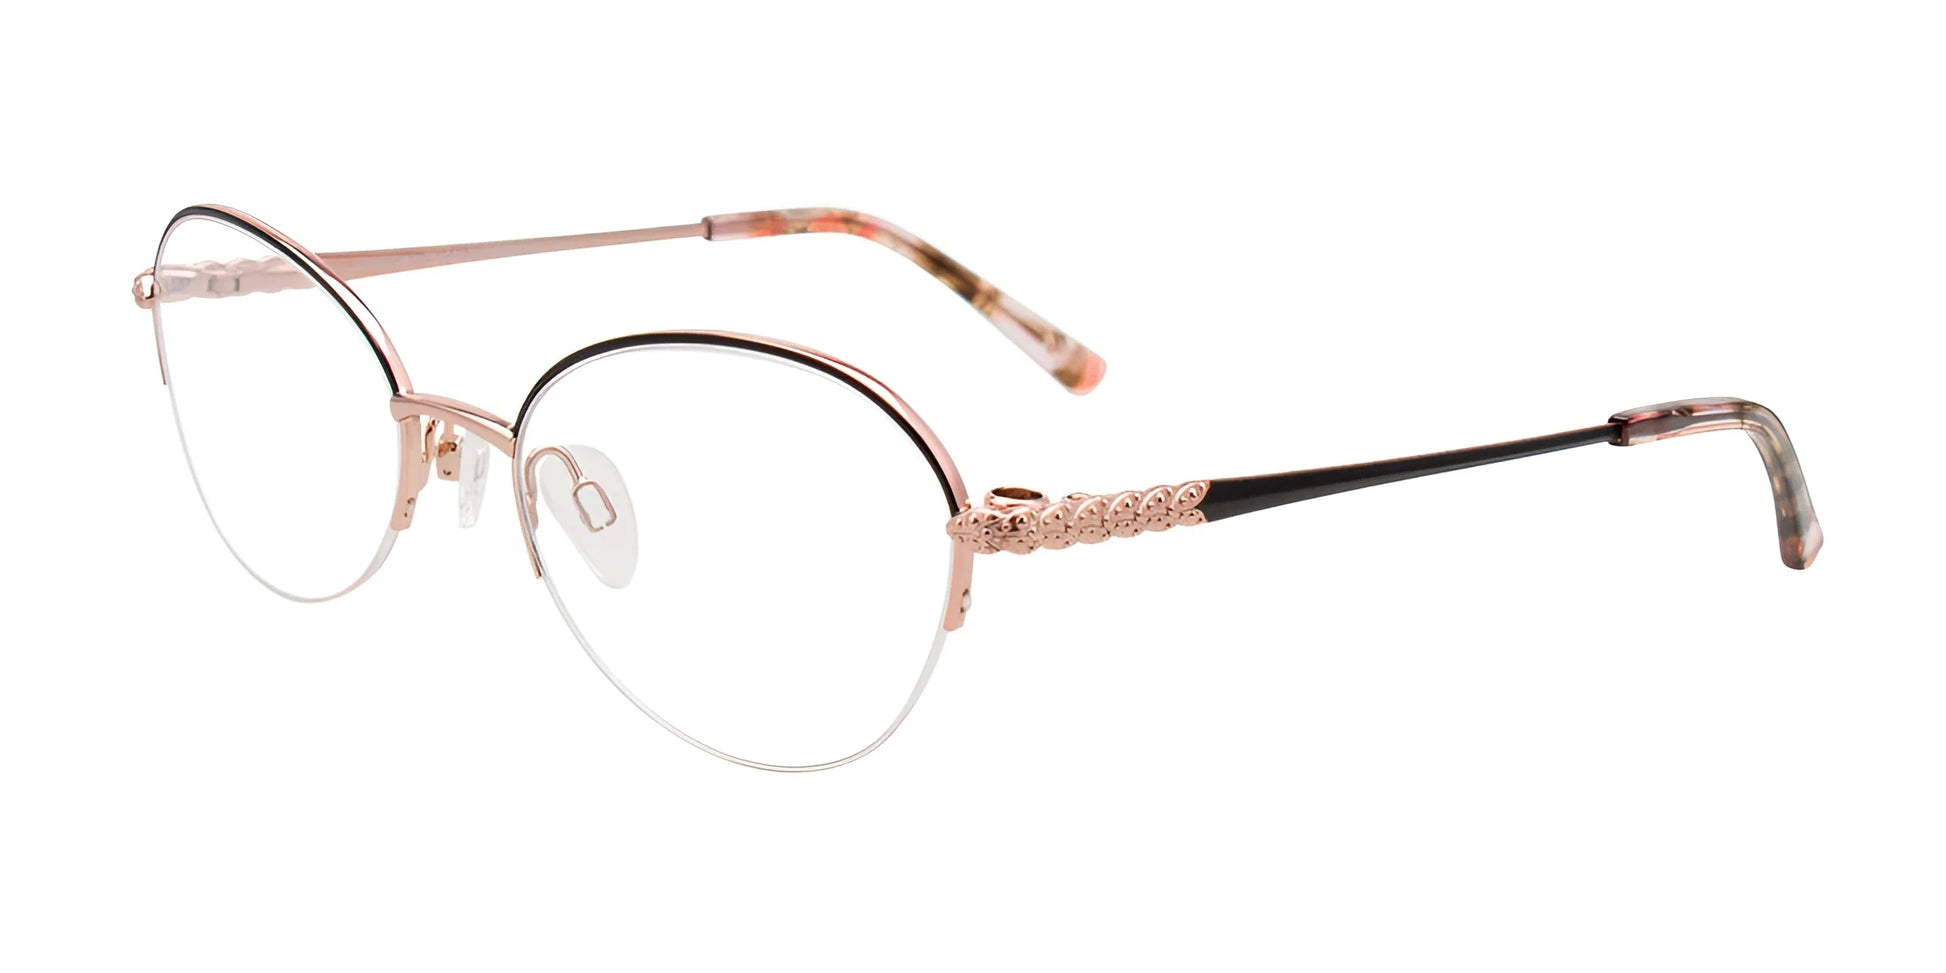 EasyClip EC660 Eyeglasses with Clip-on Sunglasses Pink Gold & Black